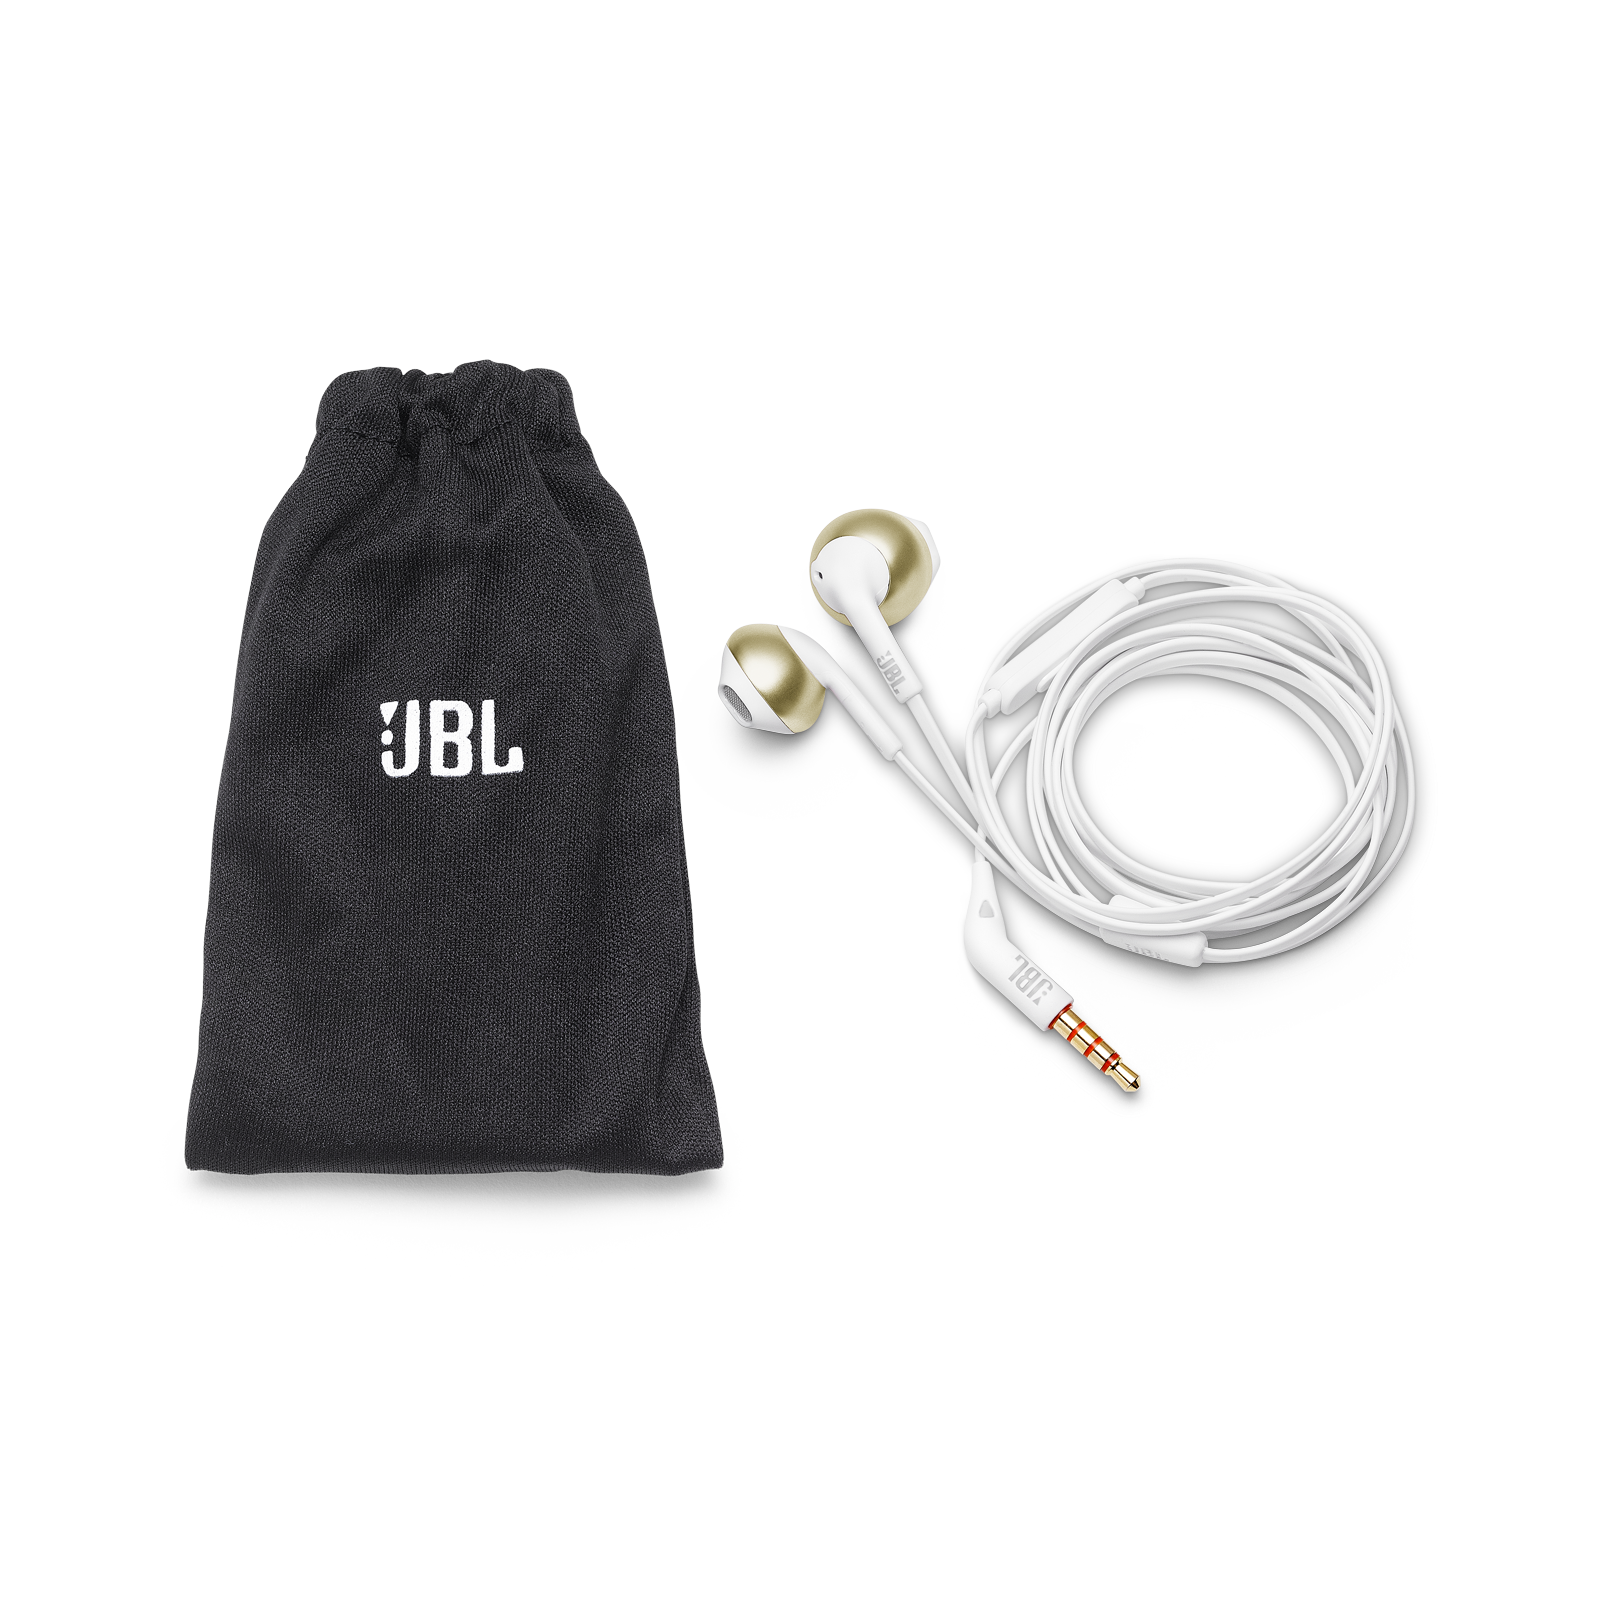 JBL Tune 205 - Champagne Gold - Earbud headphones - Detailshot 2